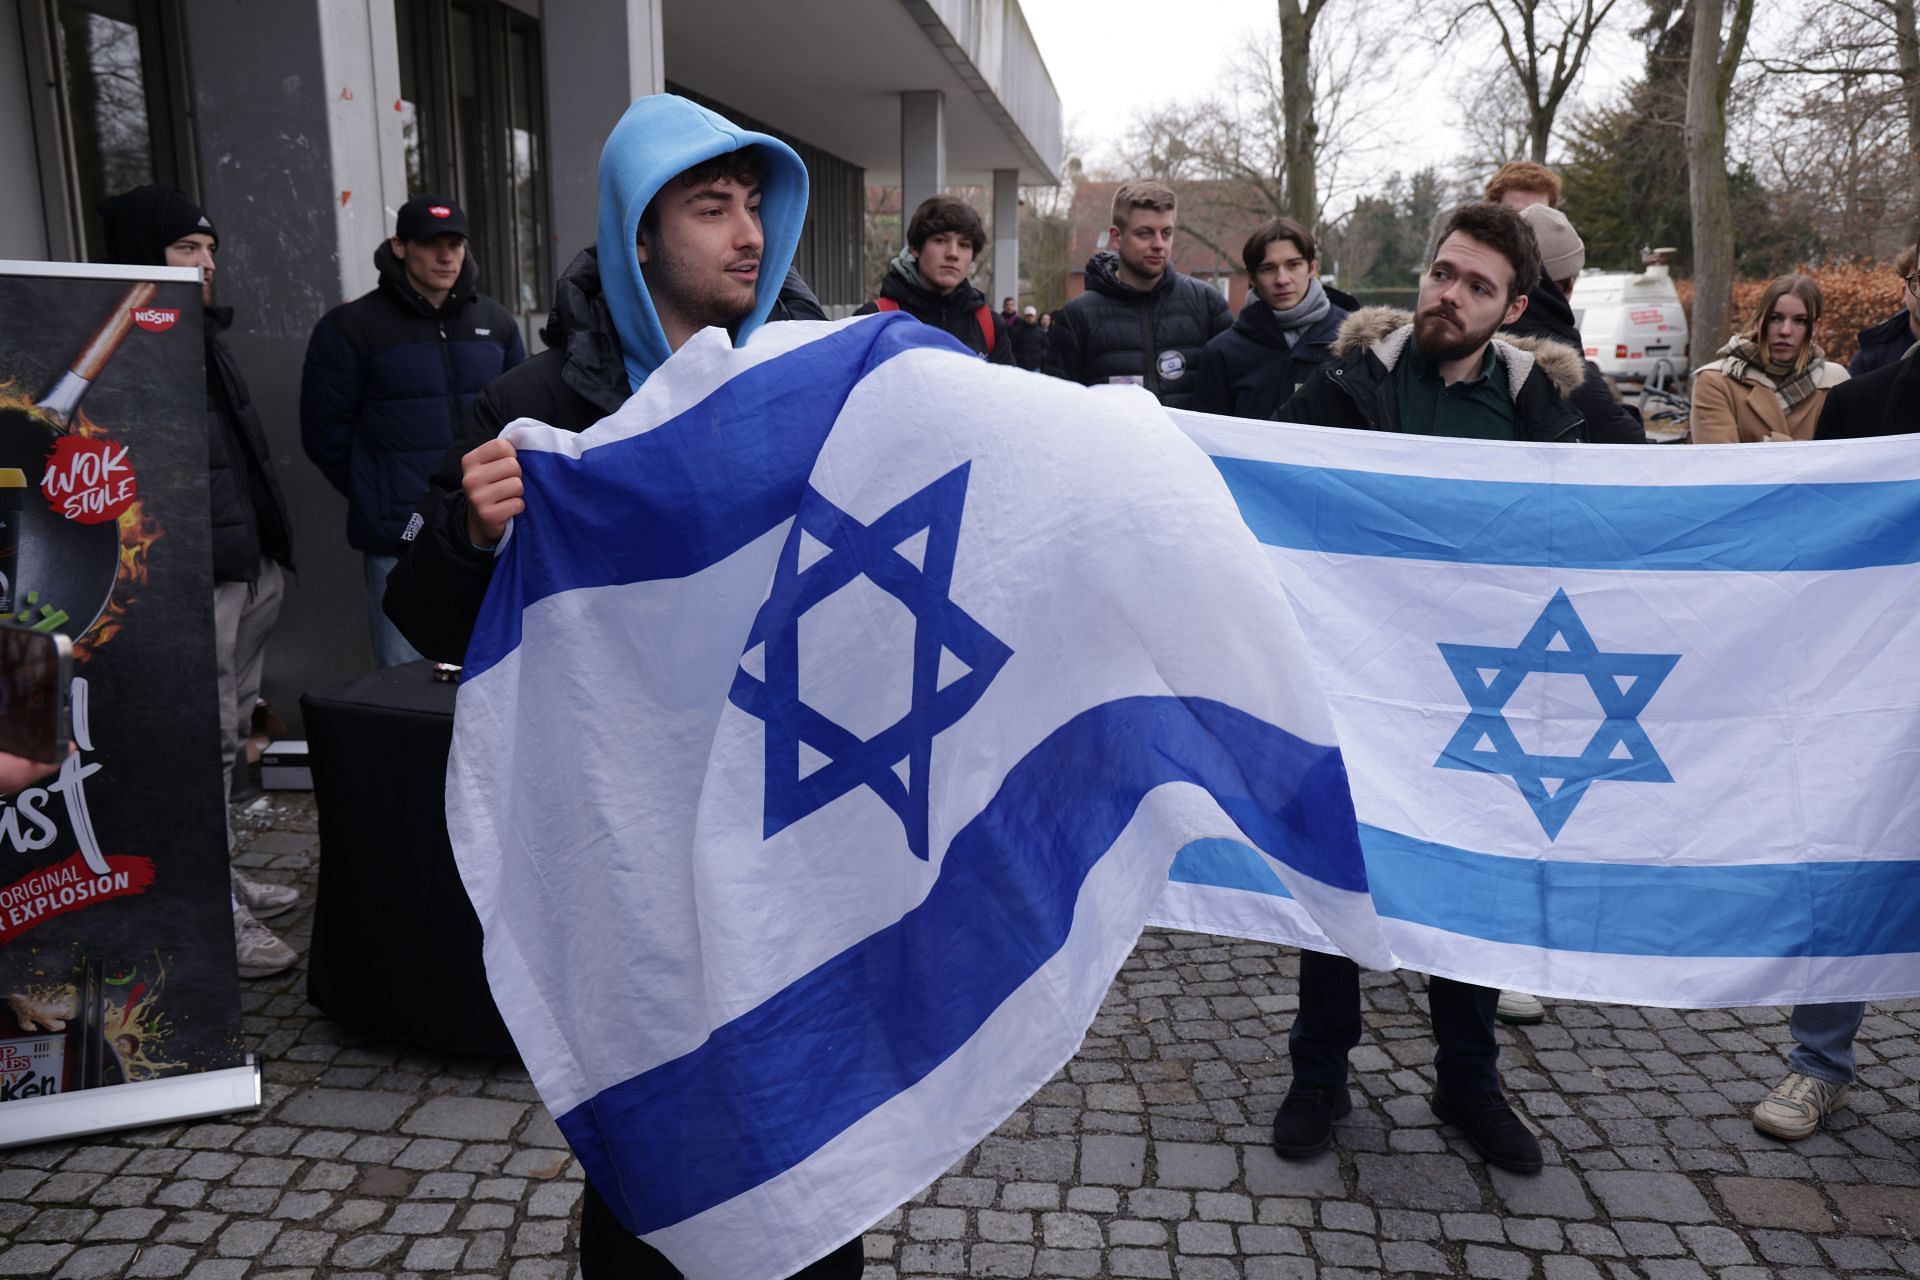 Beating Of Jewish Student Intensifies Debate Over Gaza Conflict At Berlin University